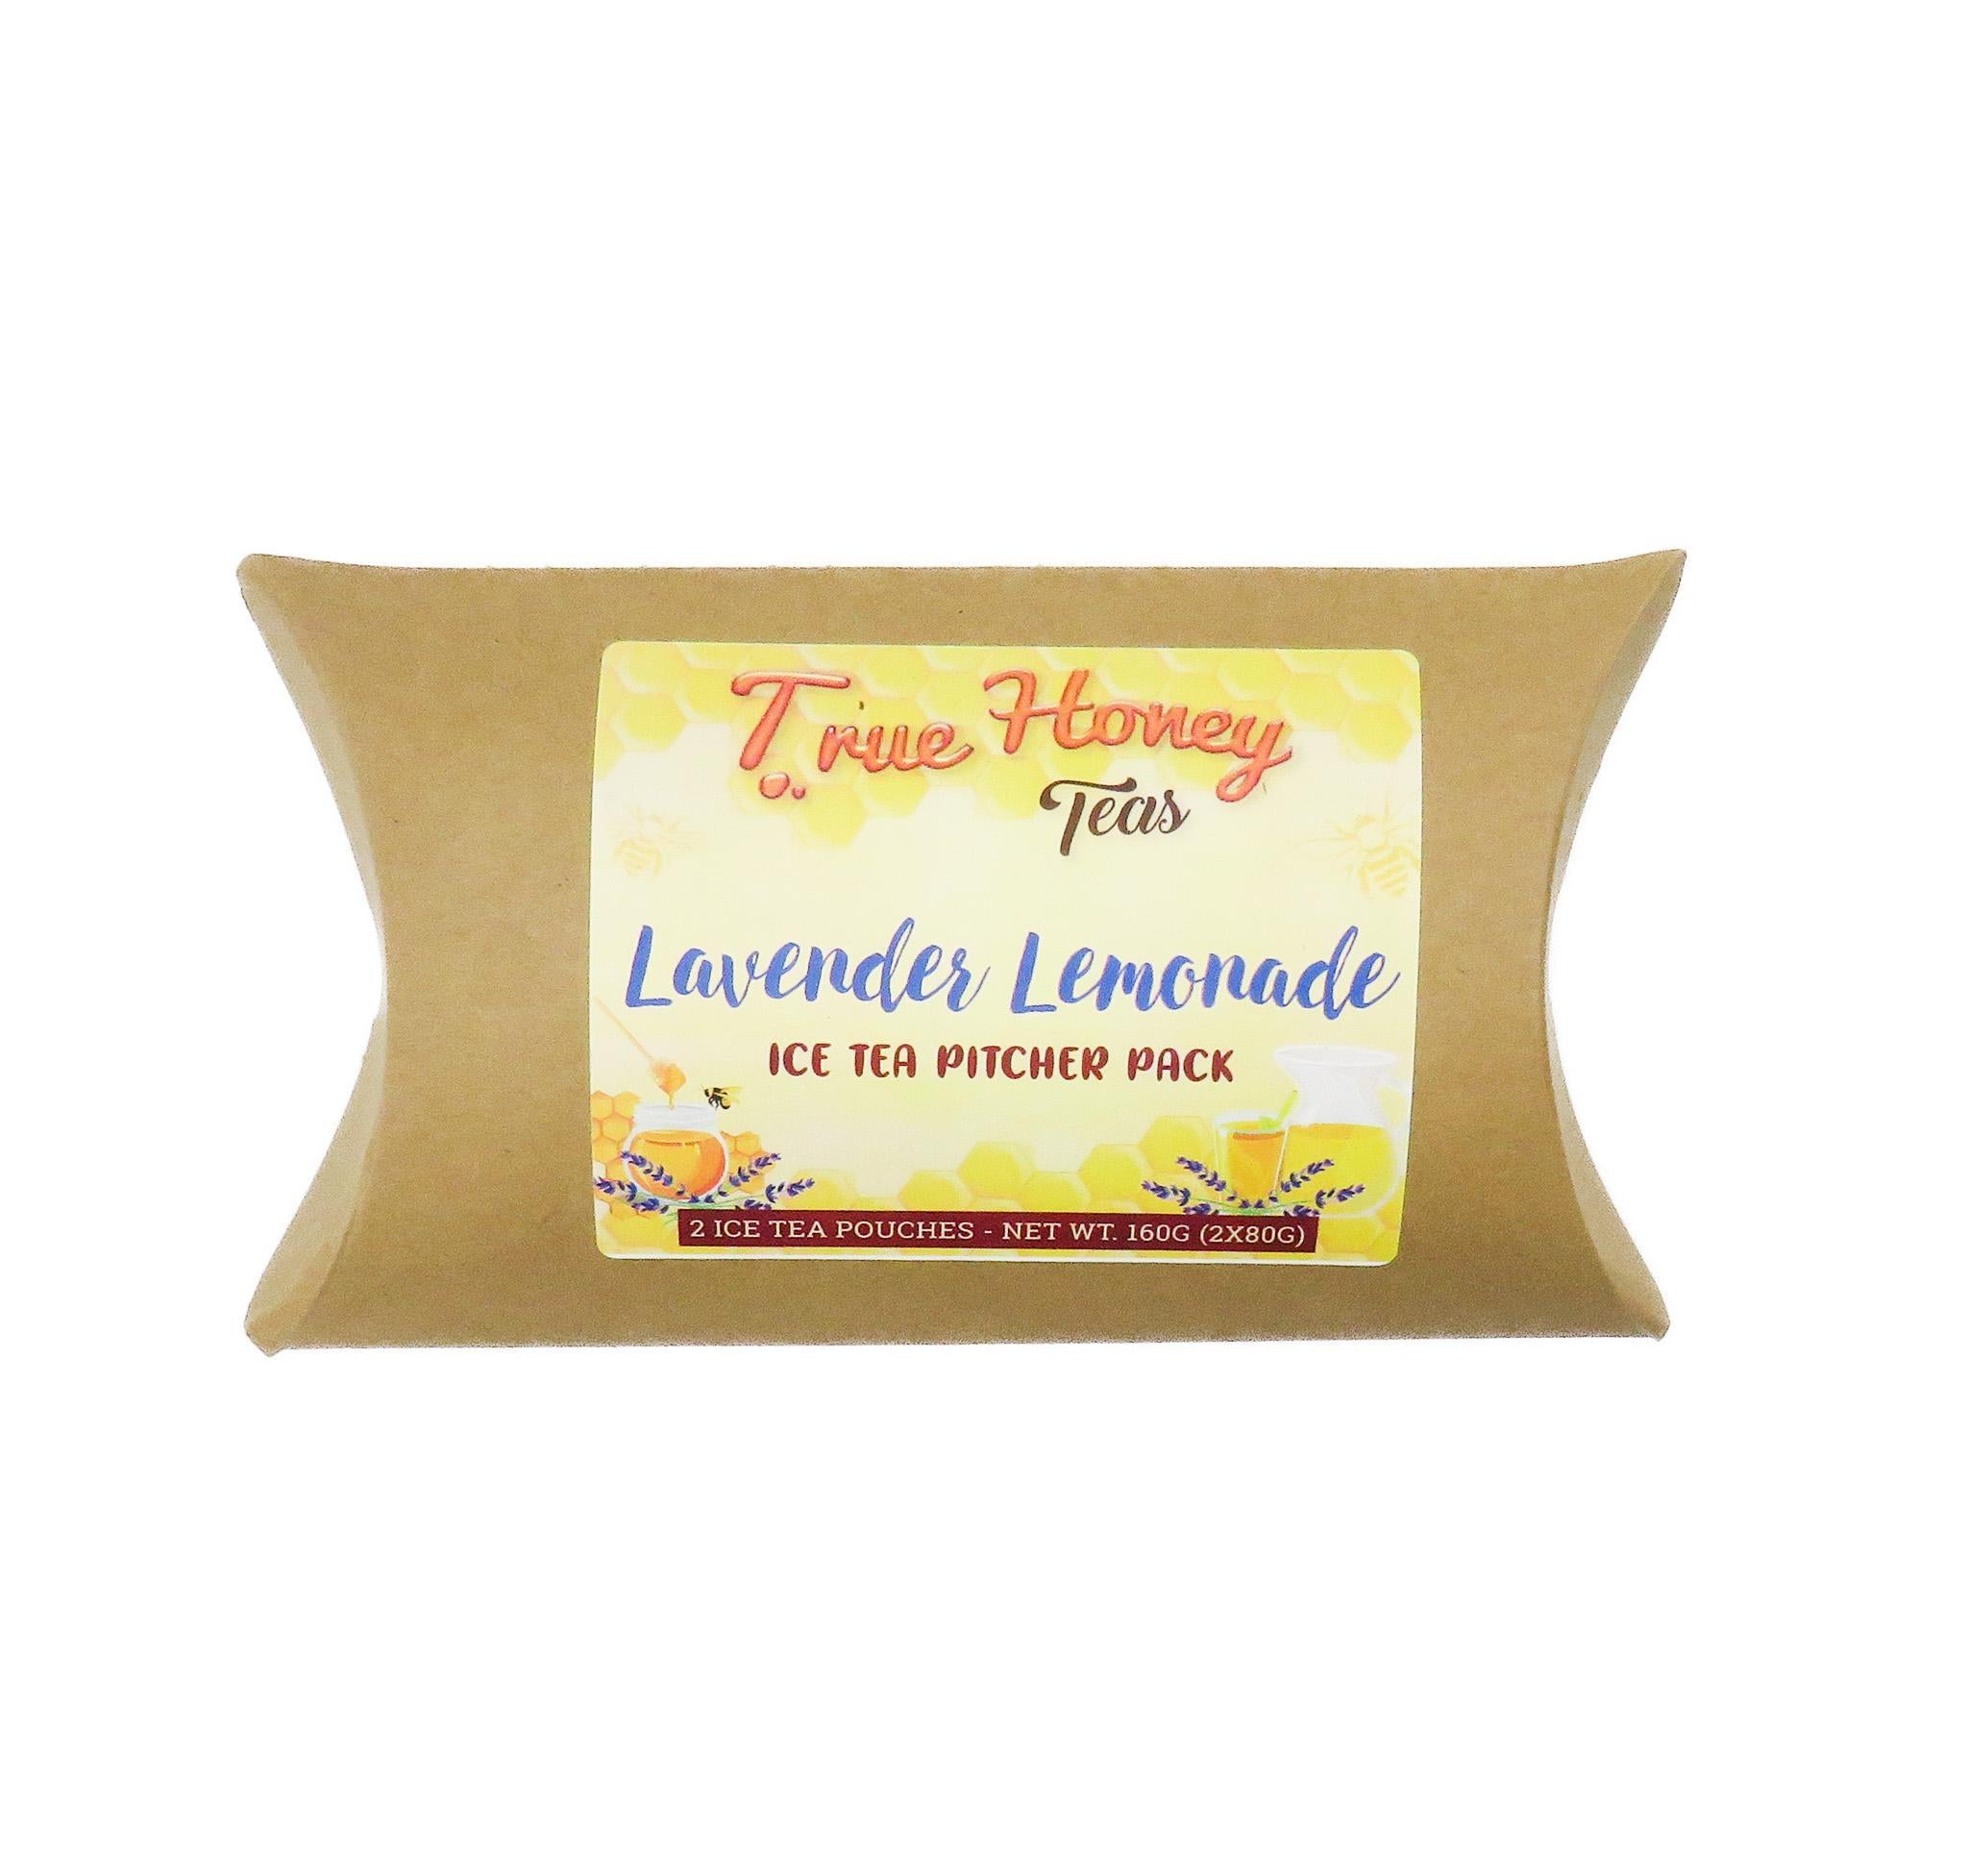 Iced Tea Pitcher Pack - Lavender Lemon